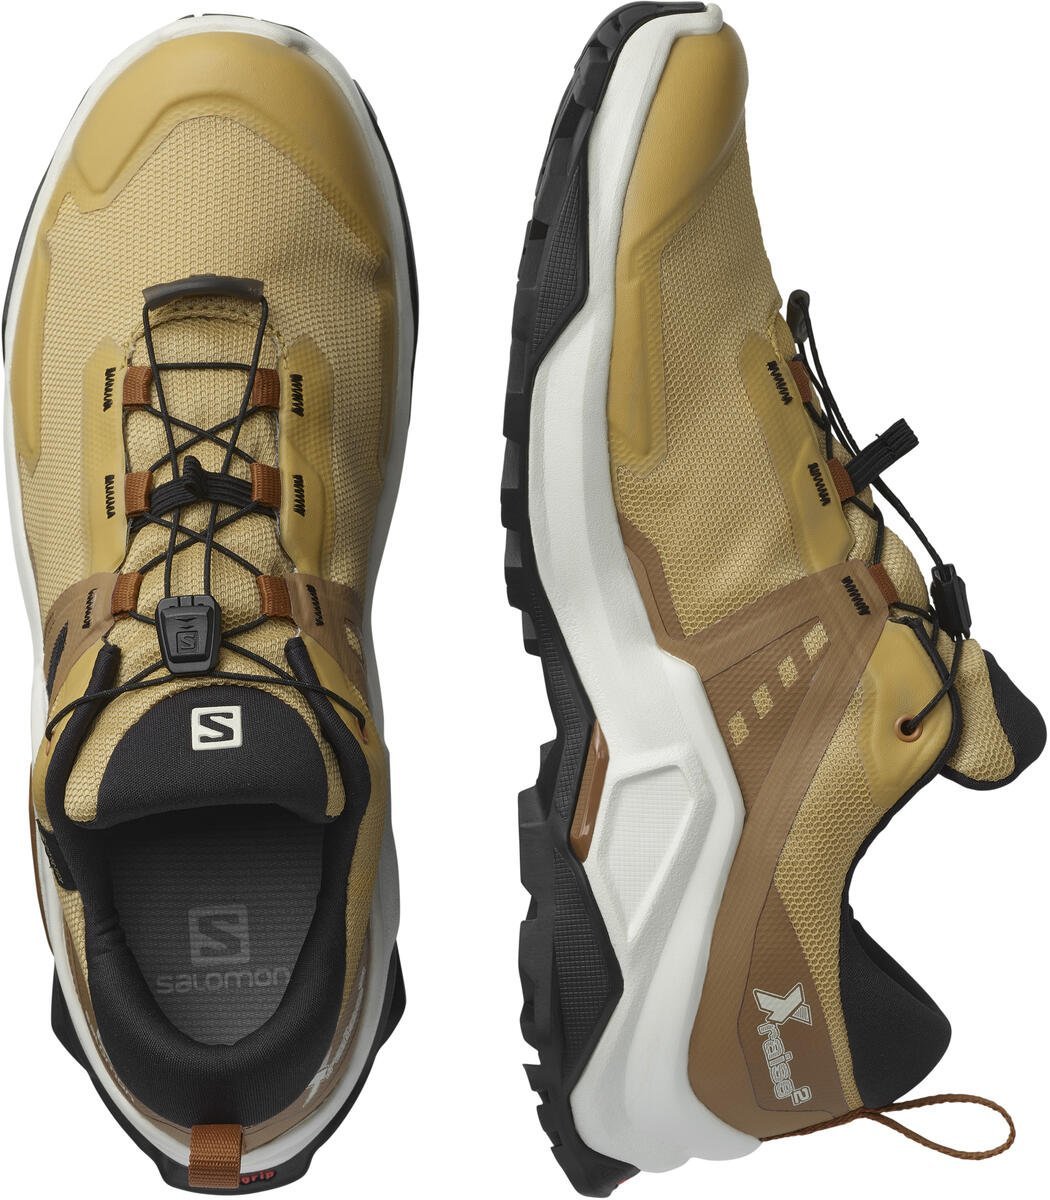 Topánky Salomon X RAISE 2 GTX M - beige